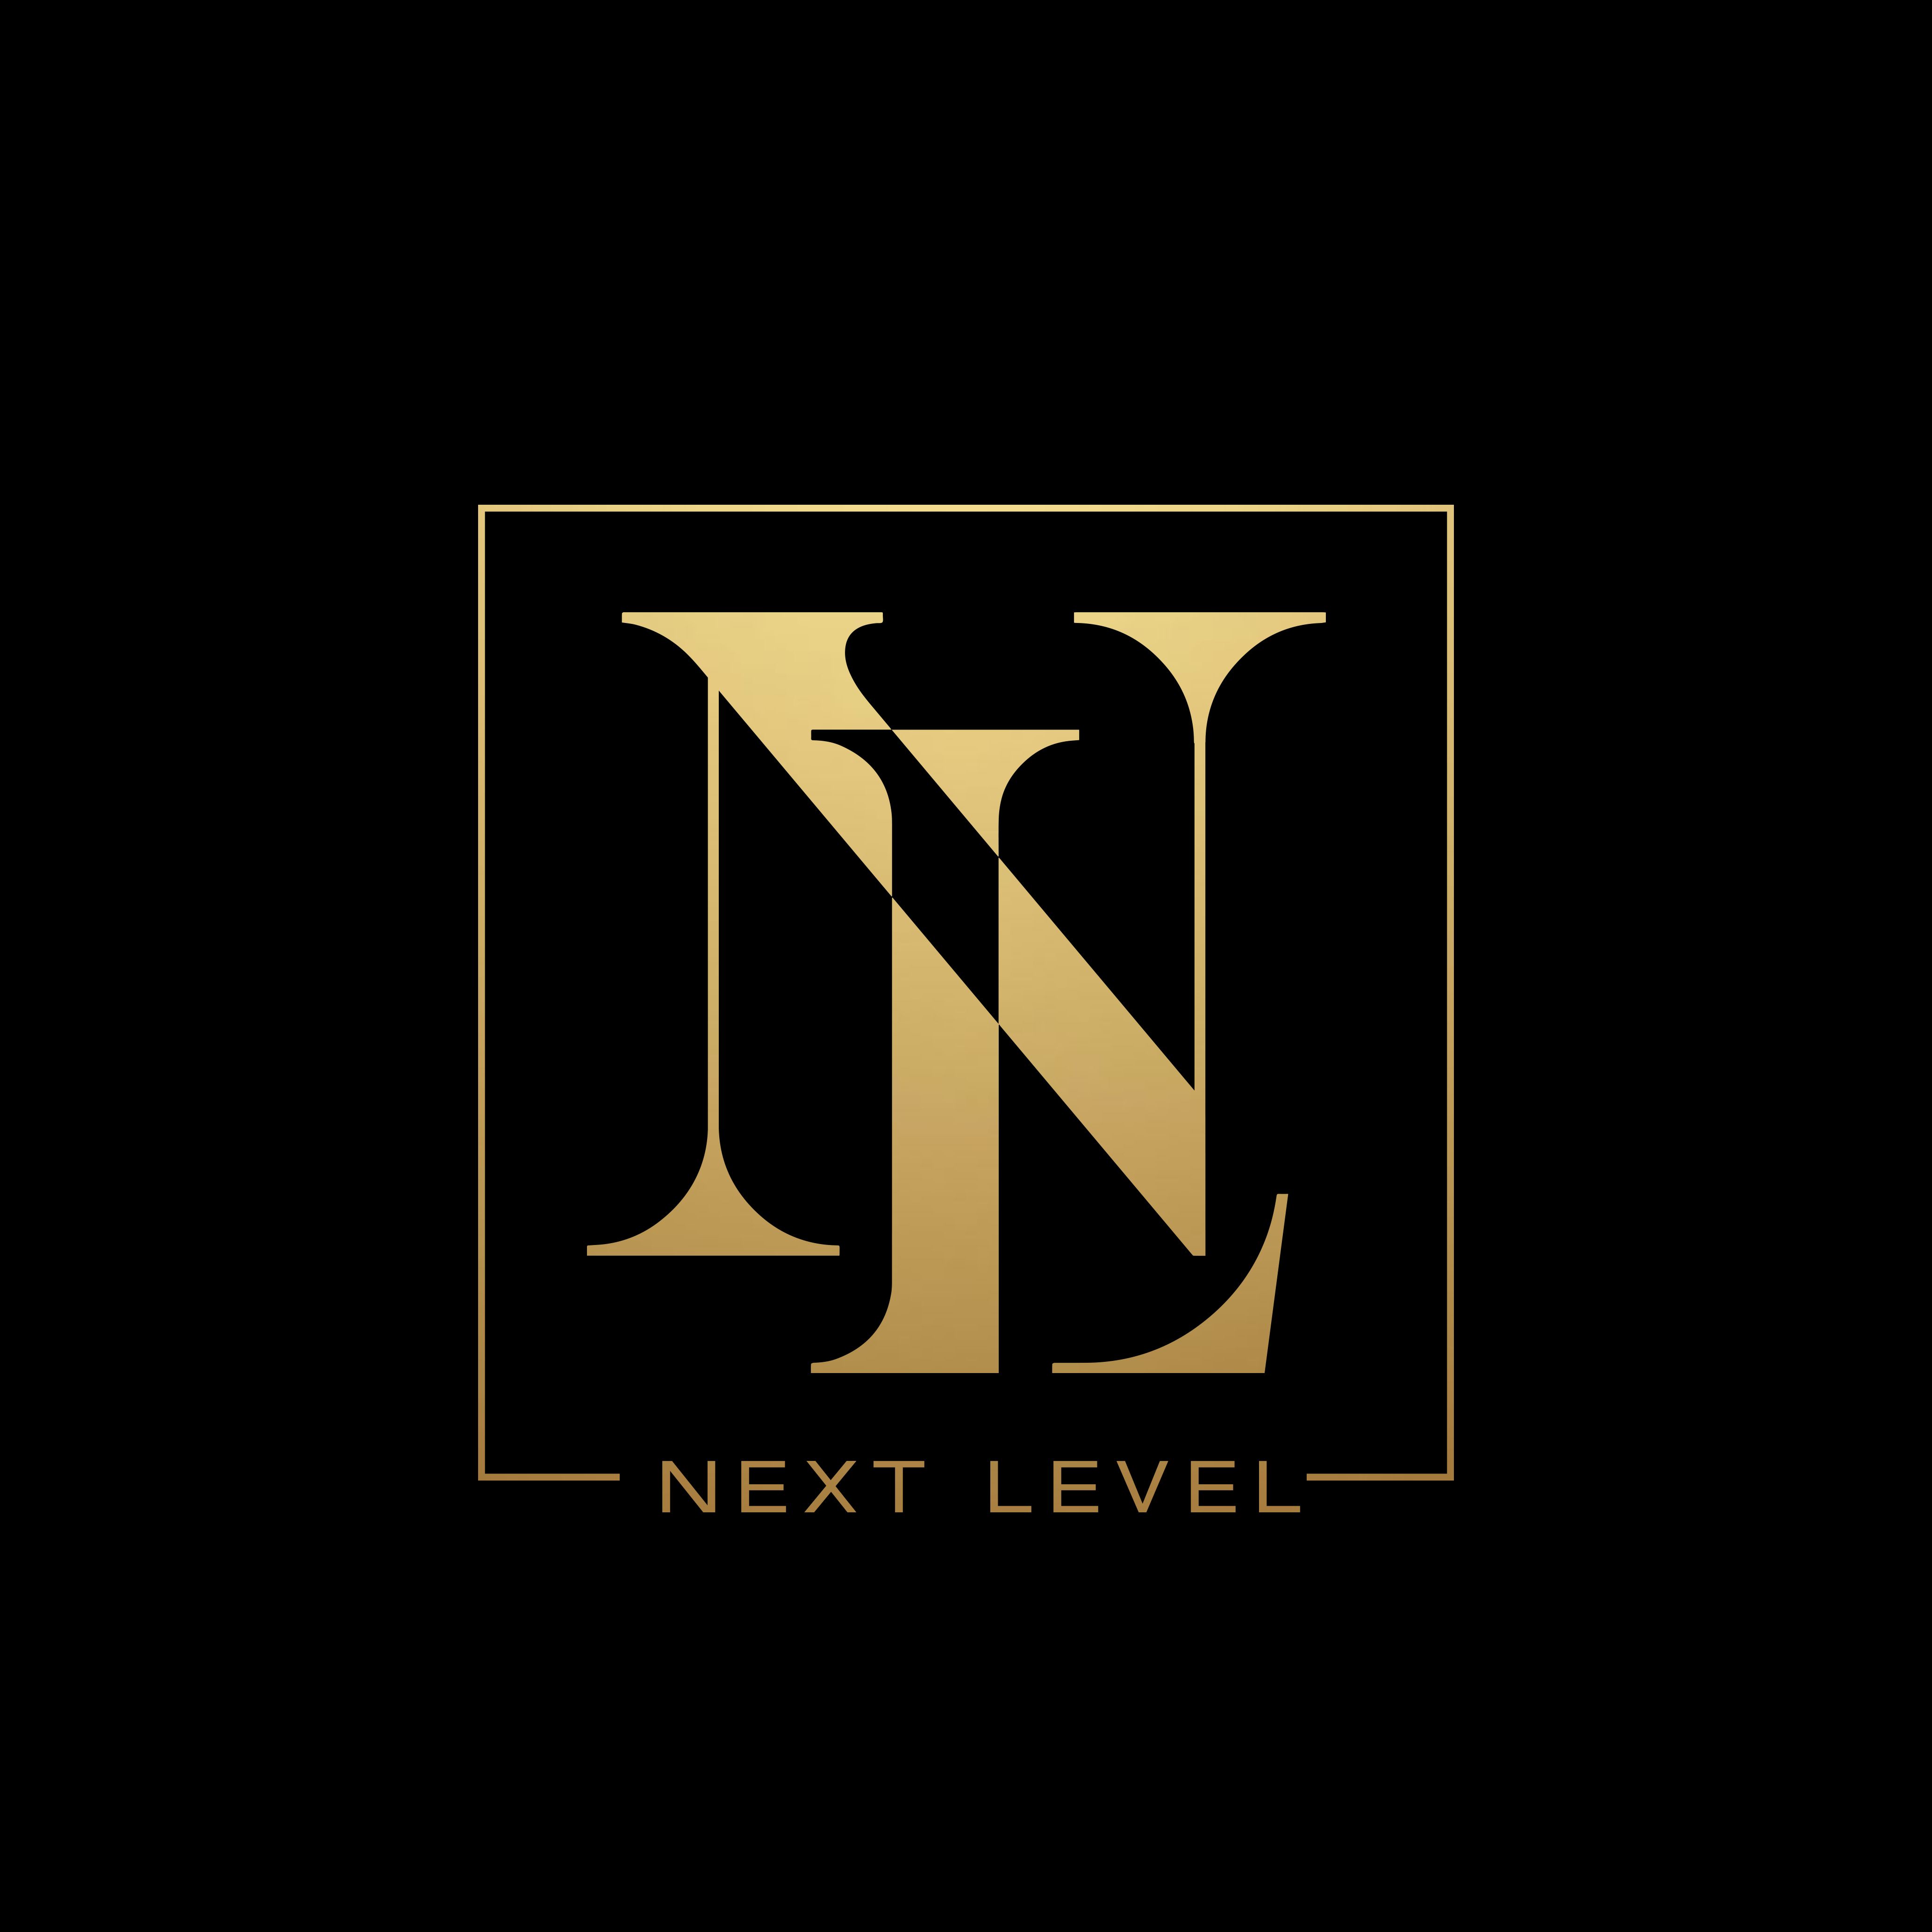 Next Level SG Pte Ltd